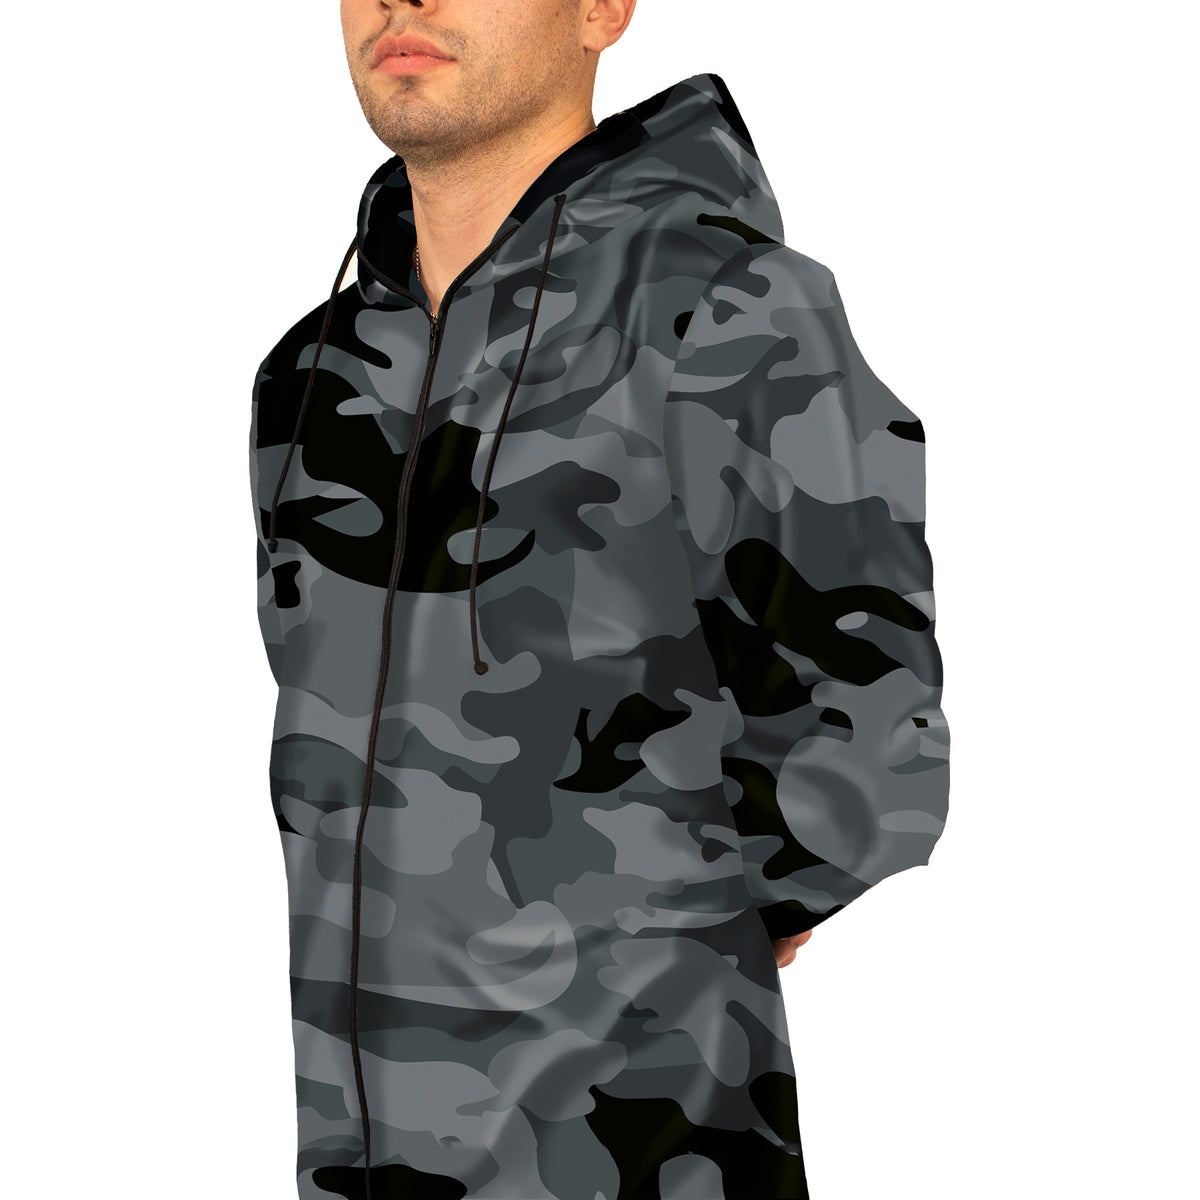 Hazmat Suit Gray / Urban Camo Jumpsuit / Overall Gray Camouflage